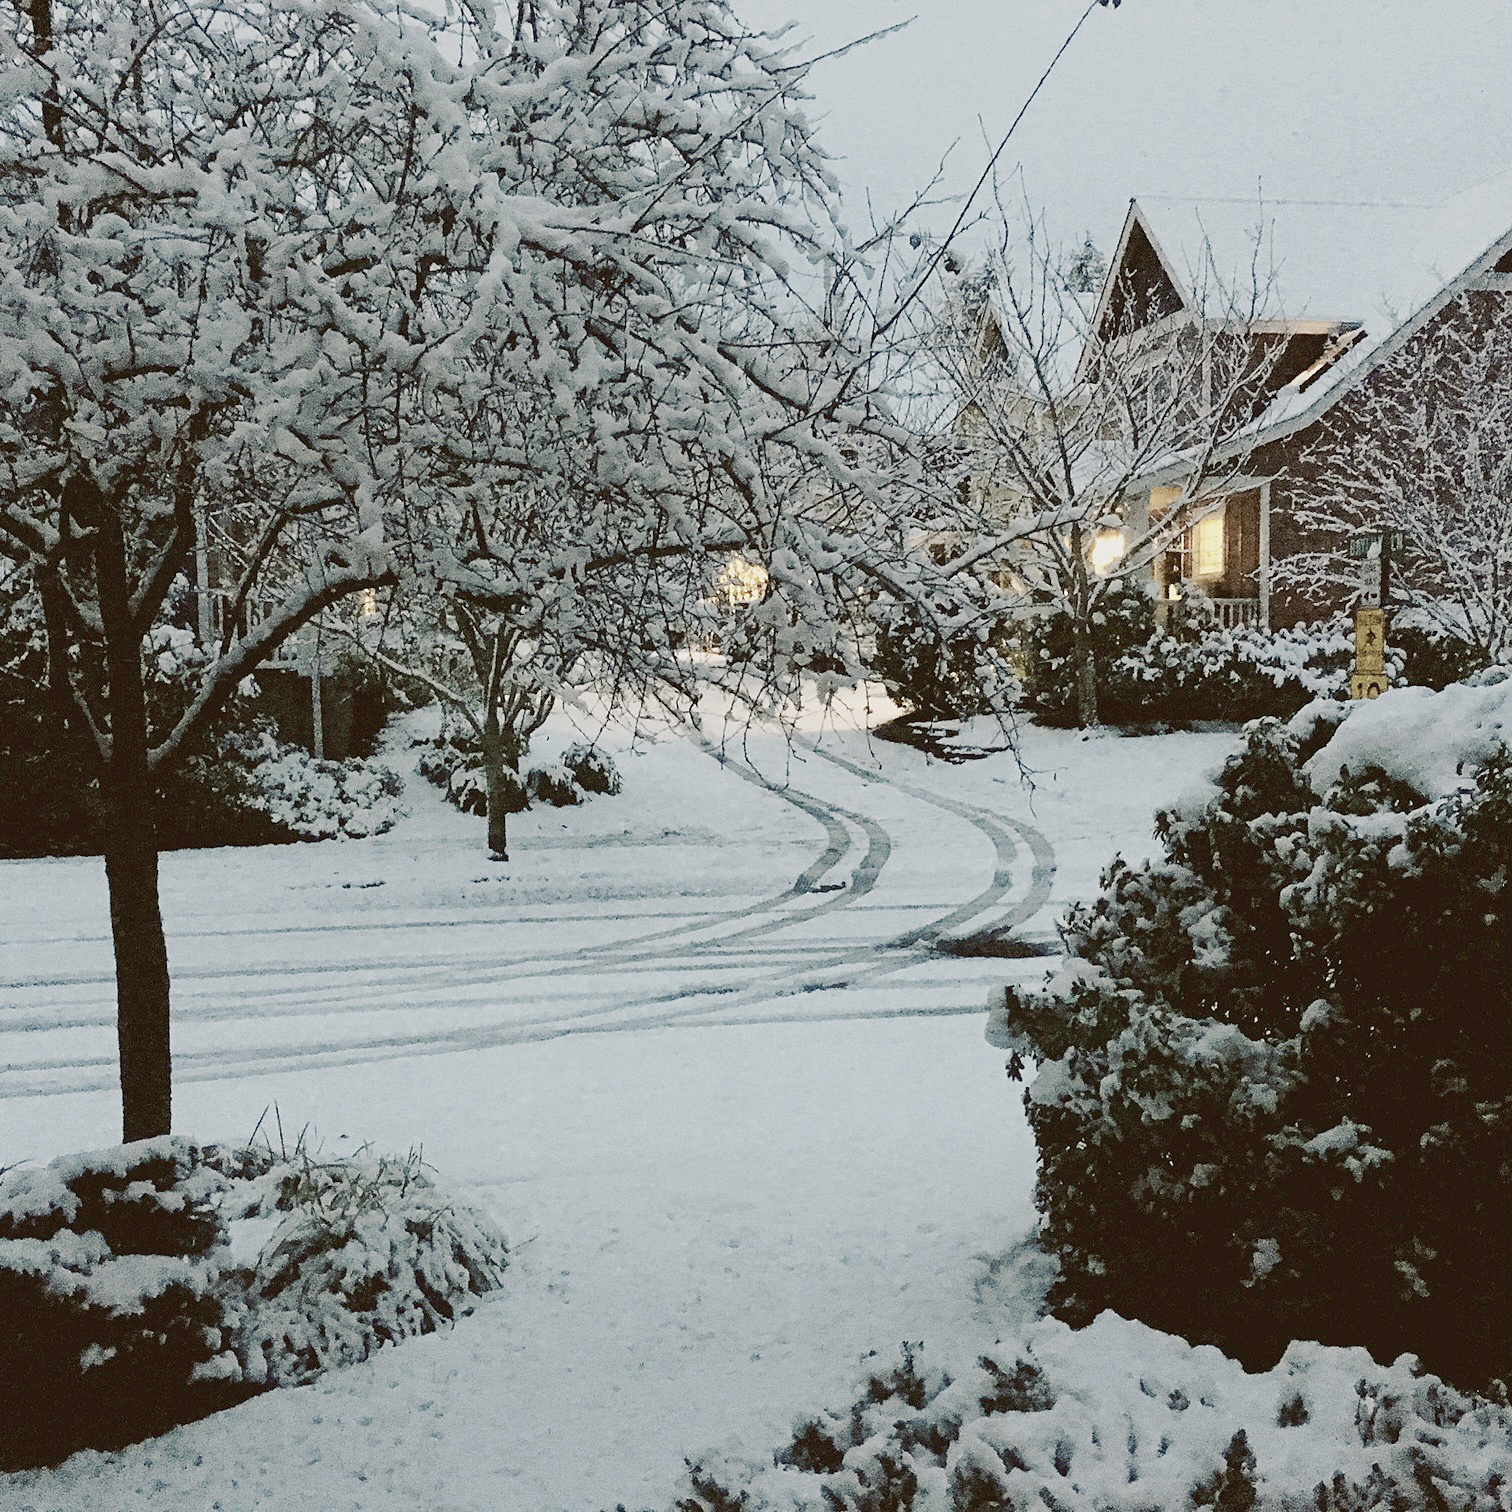 Snowstorm hits region; Bainbridge schools closed Friday